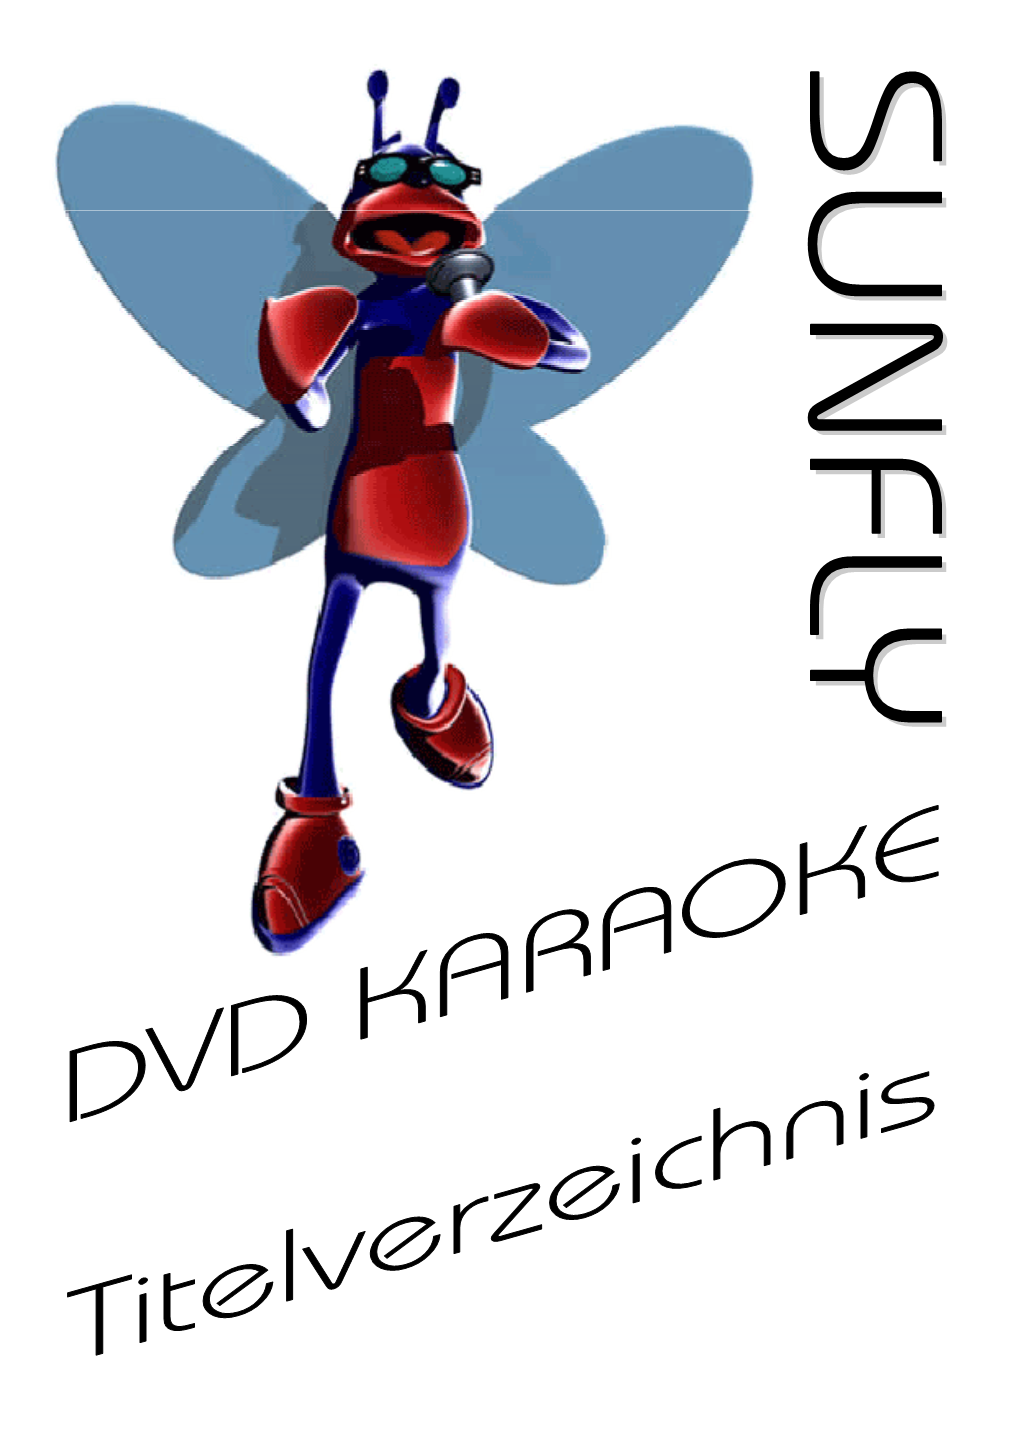 Sunfly Karaoke DVD BROSCHÜRE